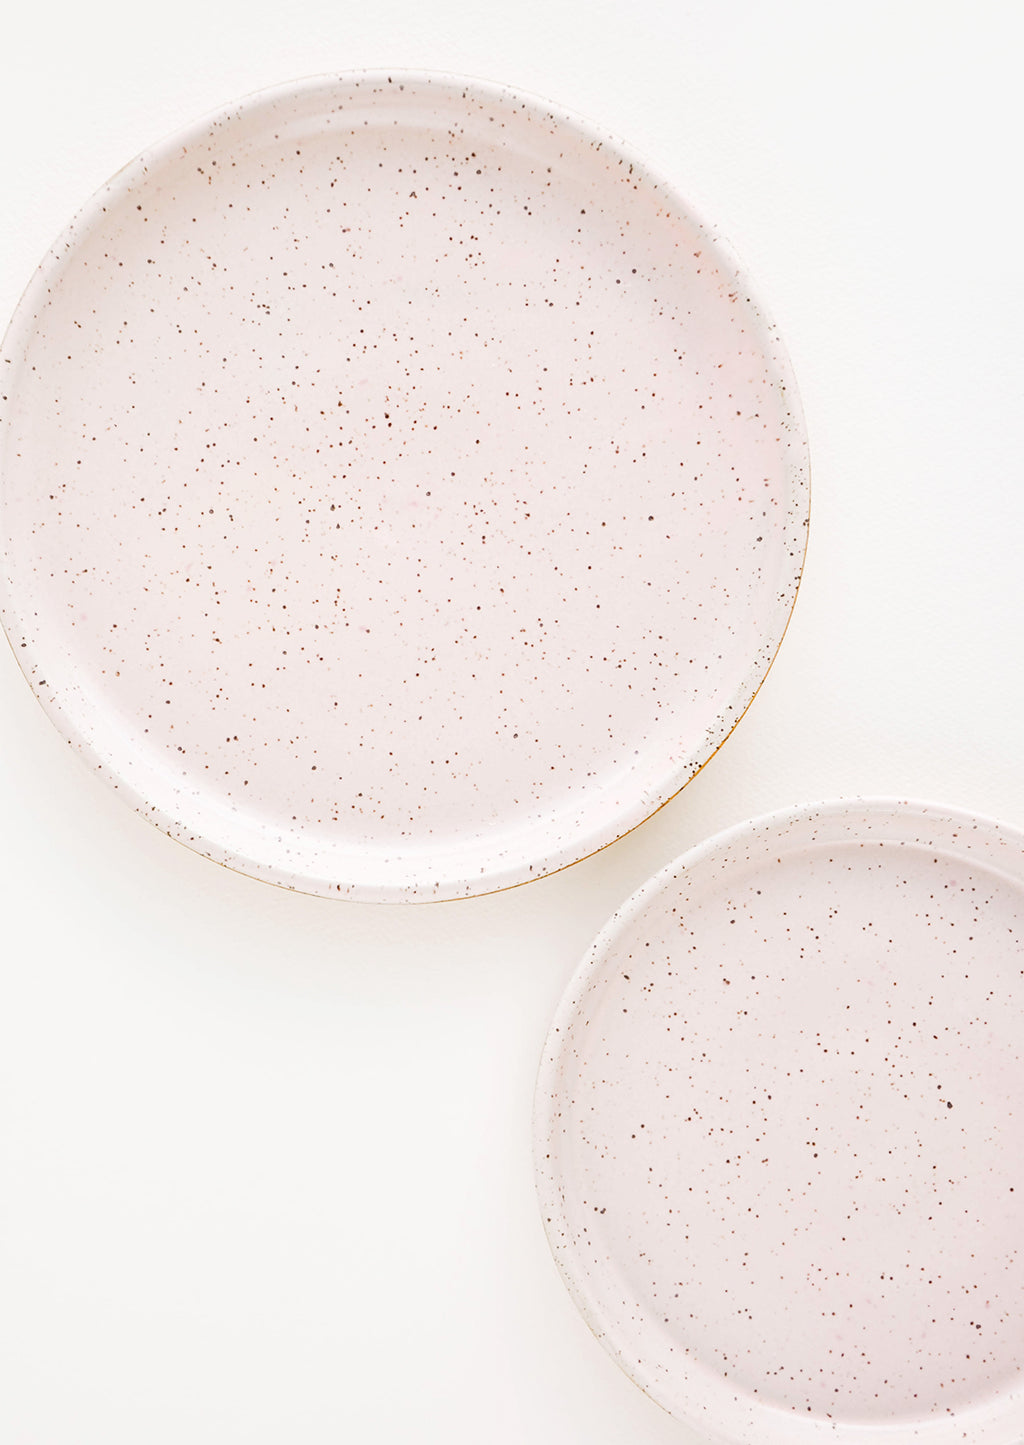 Rose Quartz / Salad Plate: A pair of Pale Pink Colored Speckled Ceramic Salad & Dinner Plates.